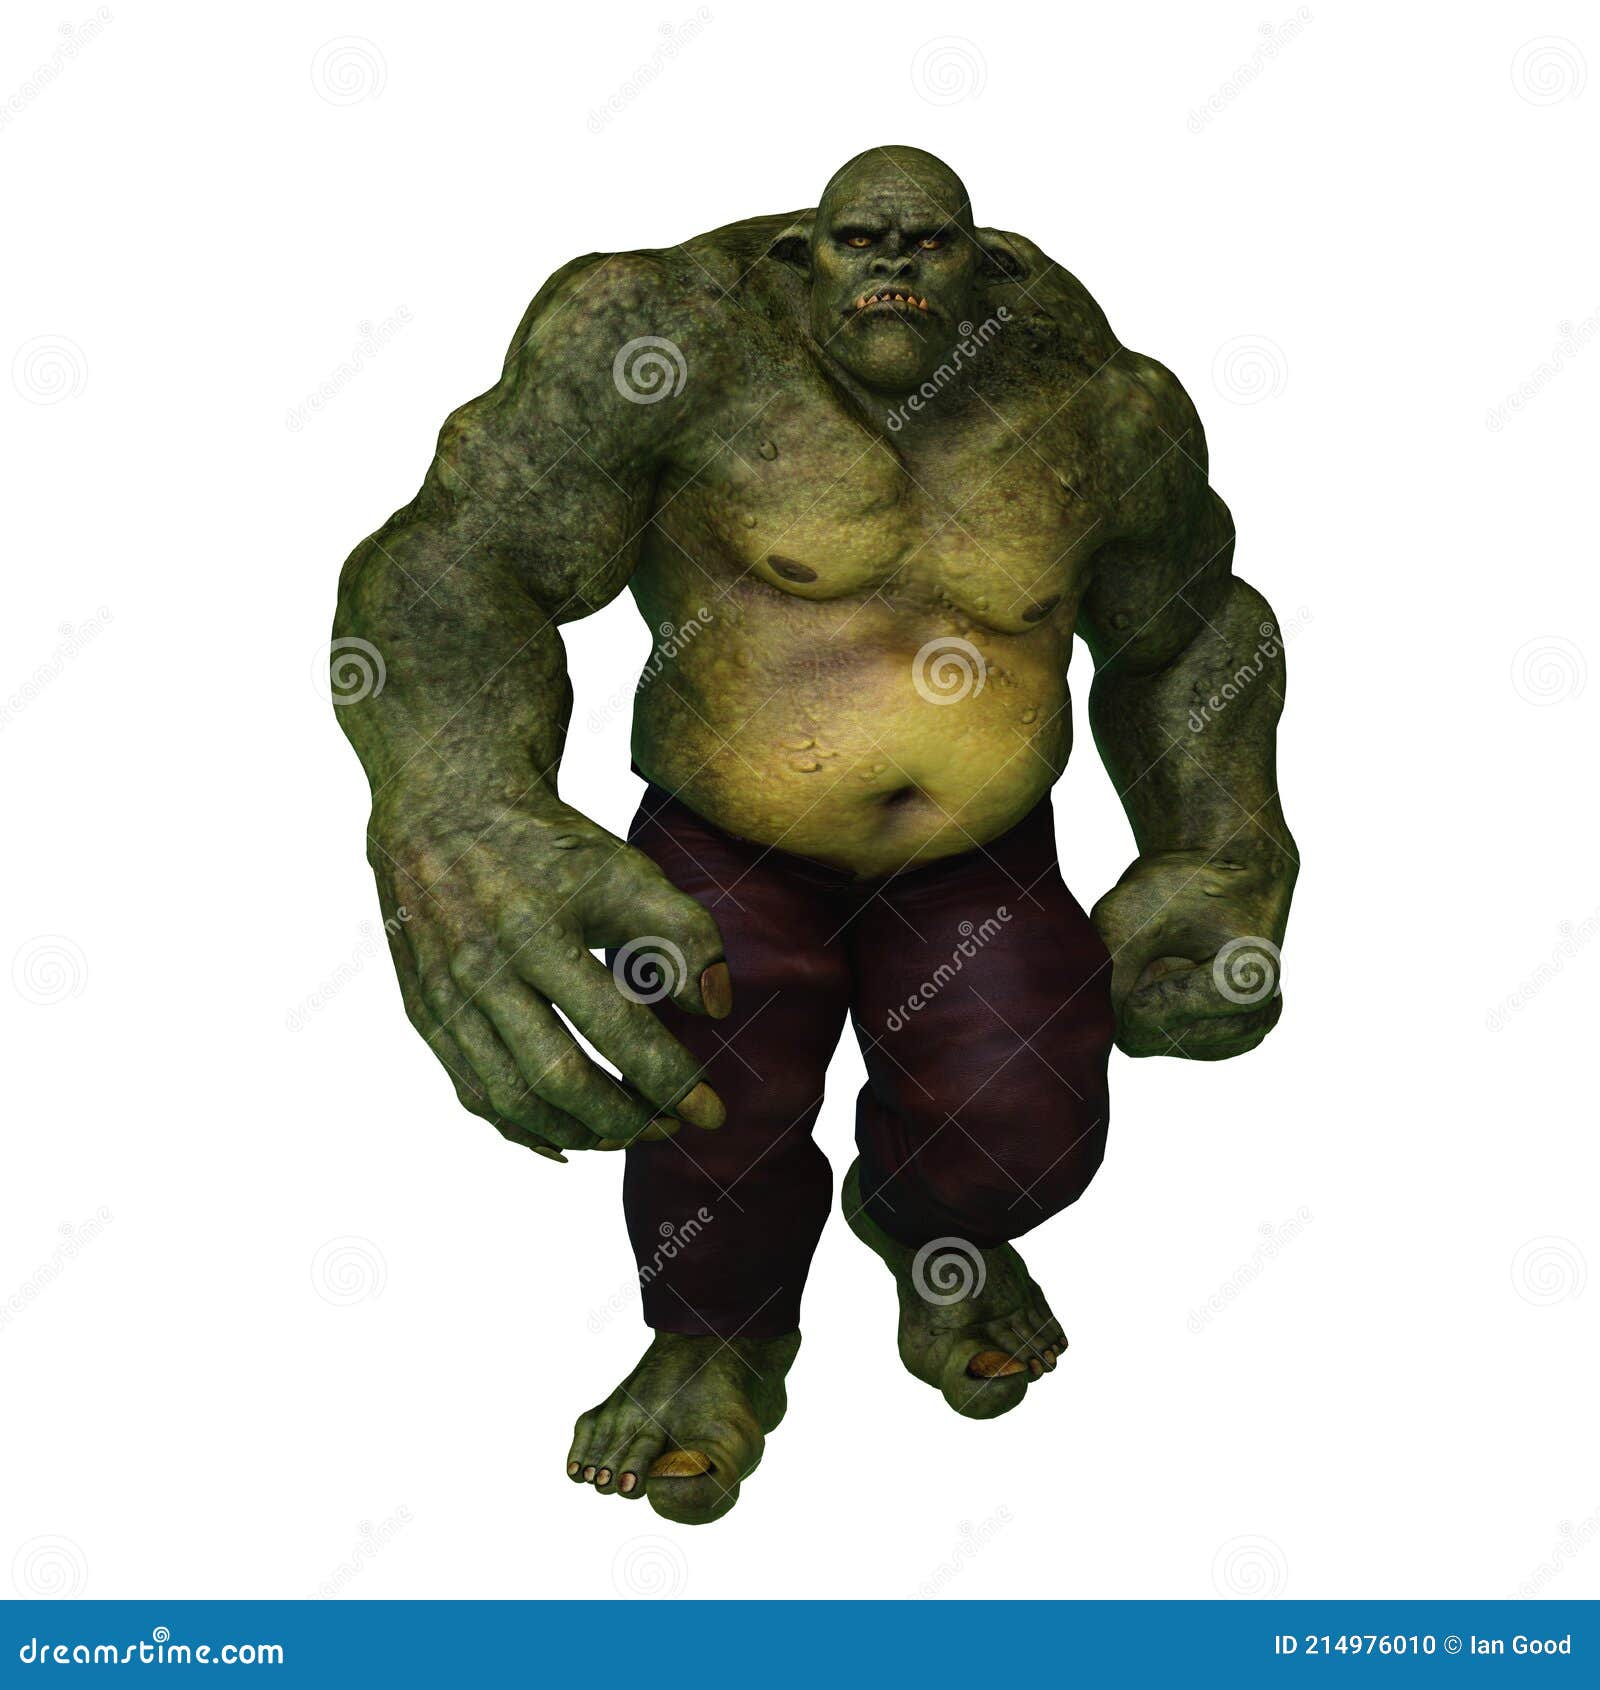 3d rendering of an enormous green ogre walking